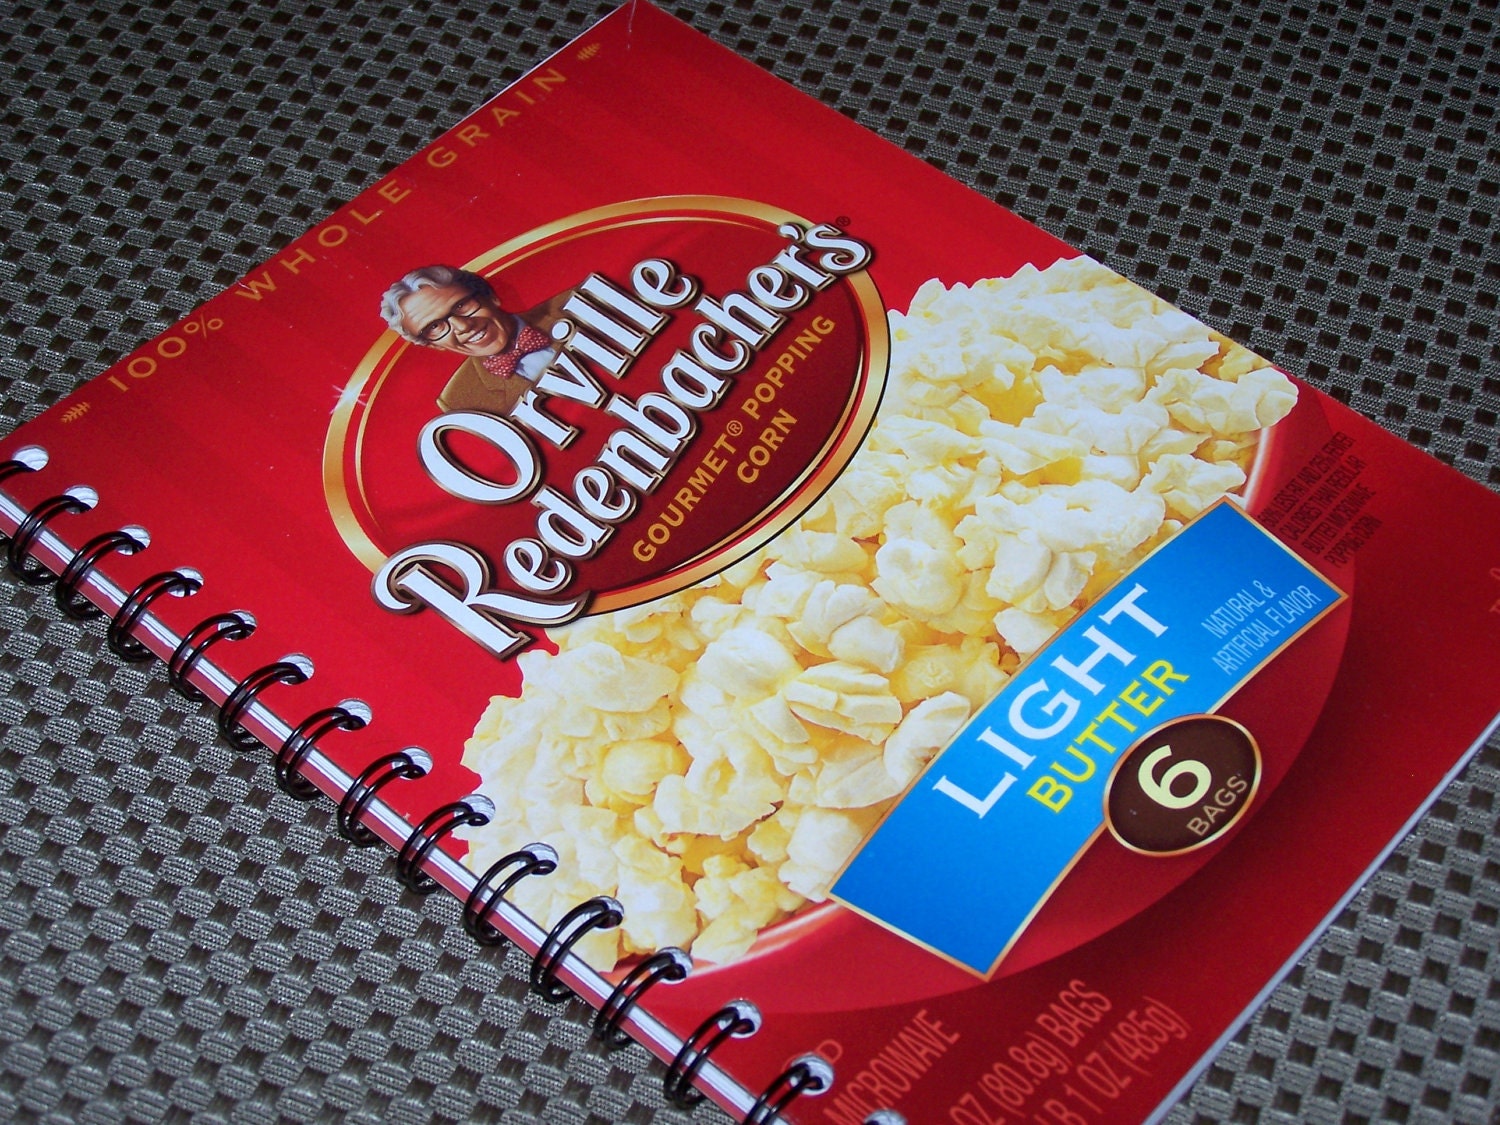 Upcycled Notebook Upcycled Notepad: ORVILLE REDENBACHER'S Popcorn Notebook Recyled 50 Page Spiral Bound Notebook